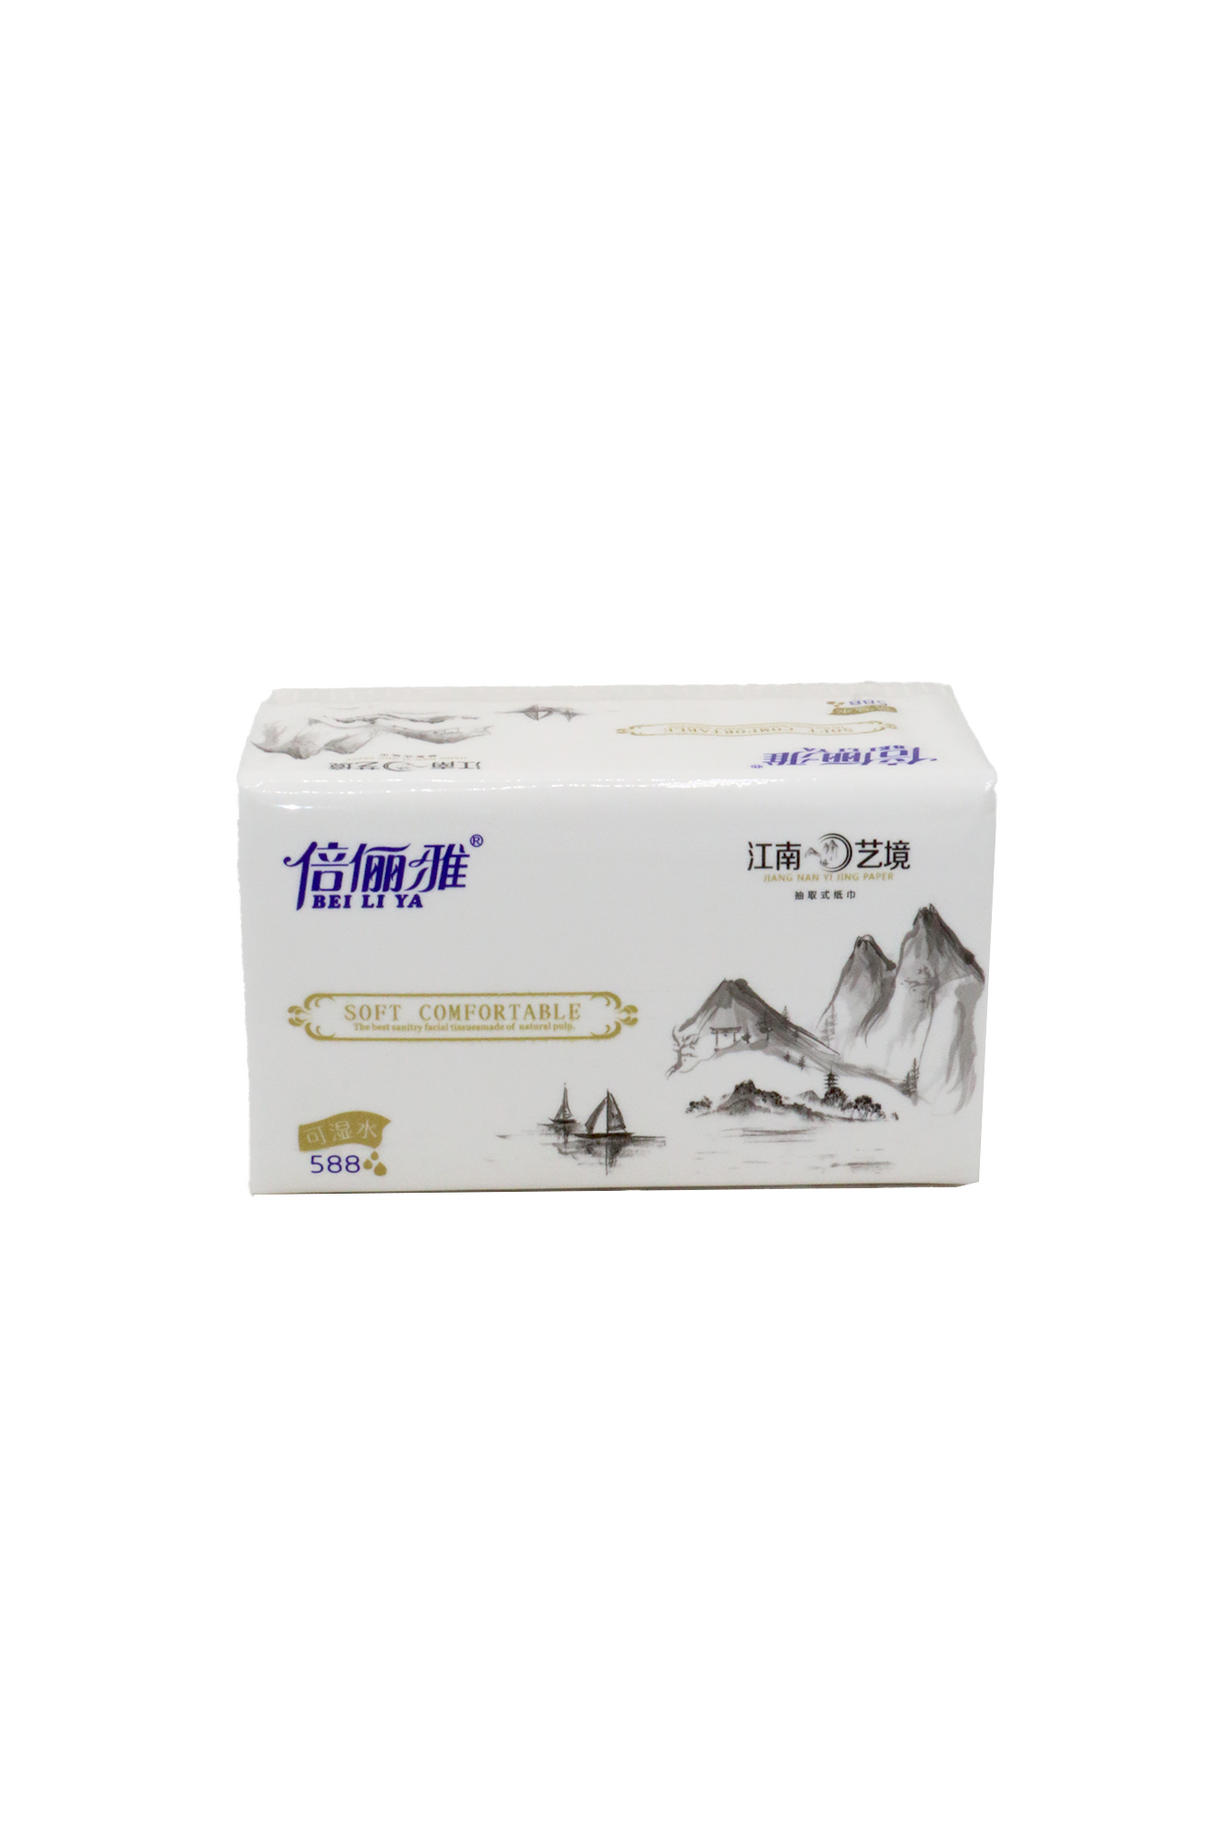 tissue paper china 588